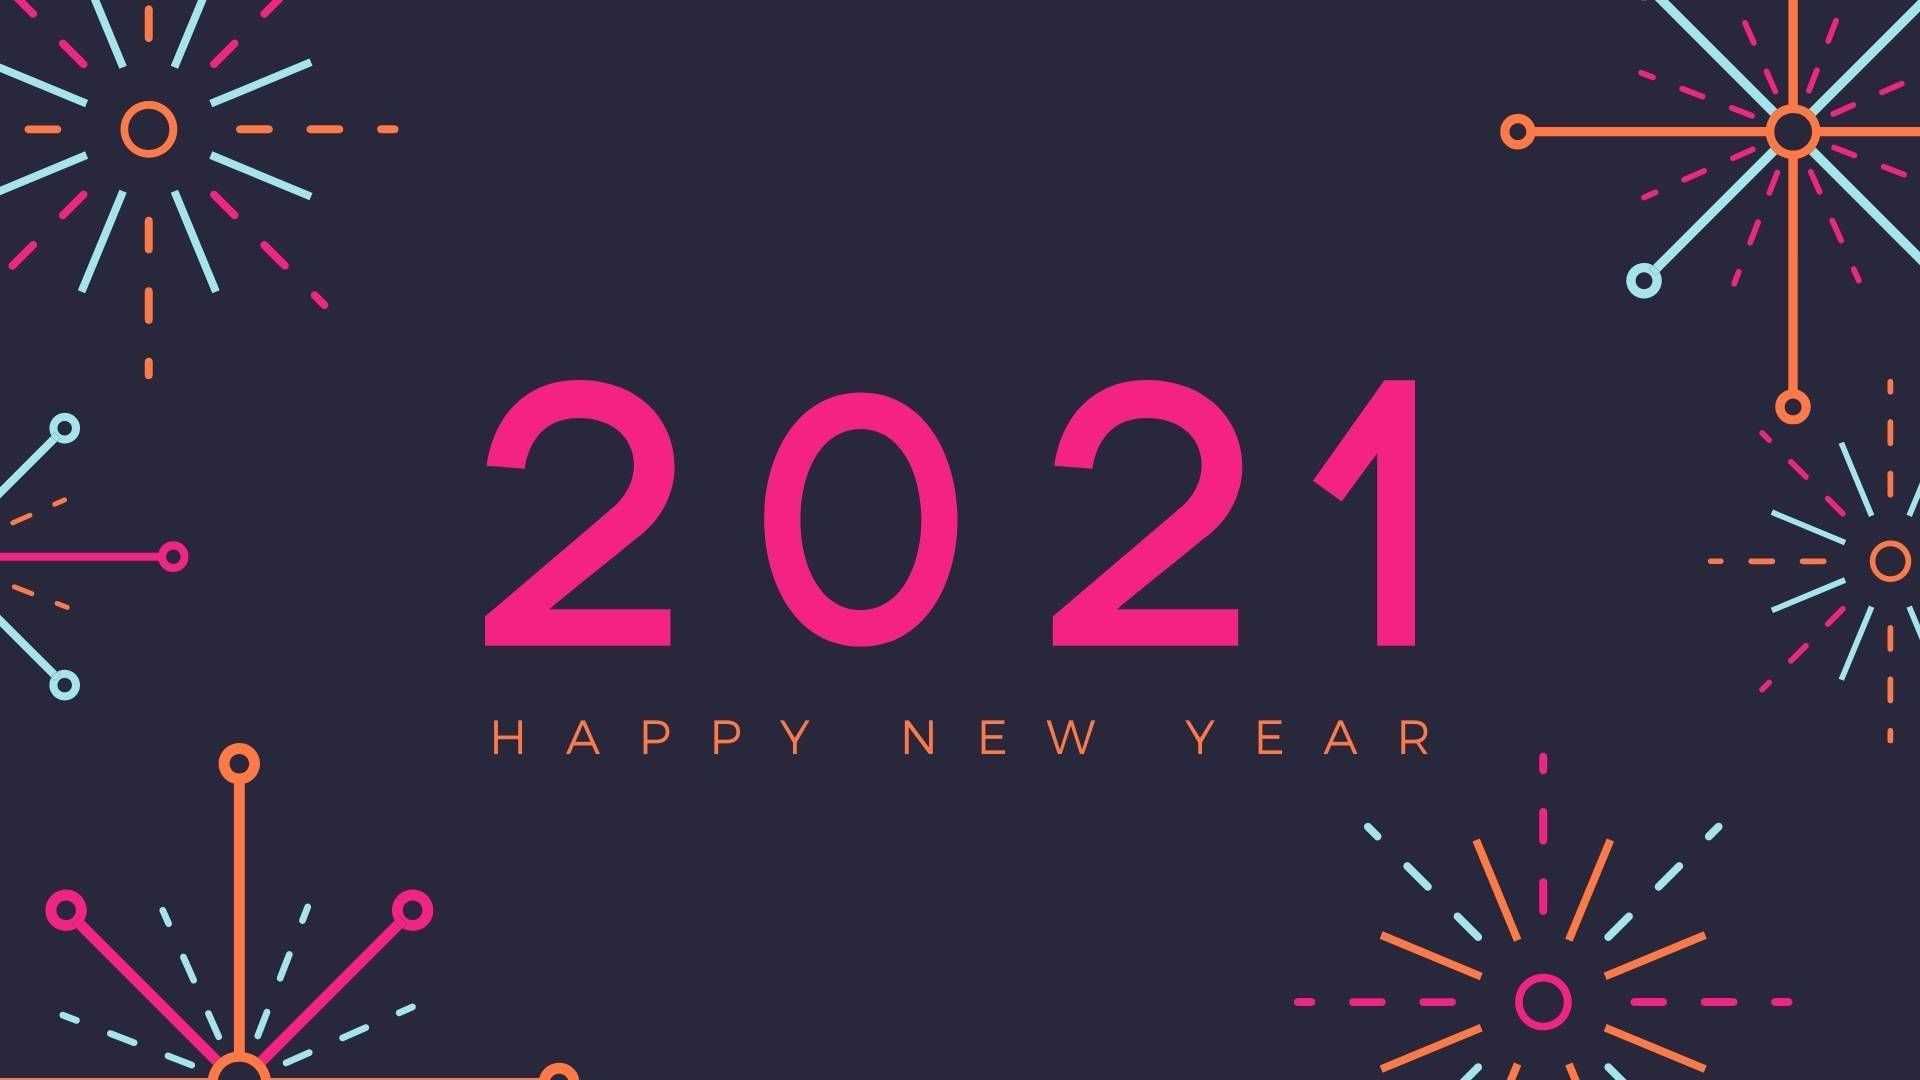 Hd Happy New Year 2021 Wallpaper Kolpaper Awesome Free Hd Wallpapers